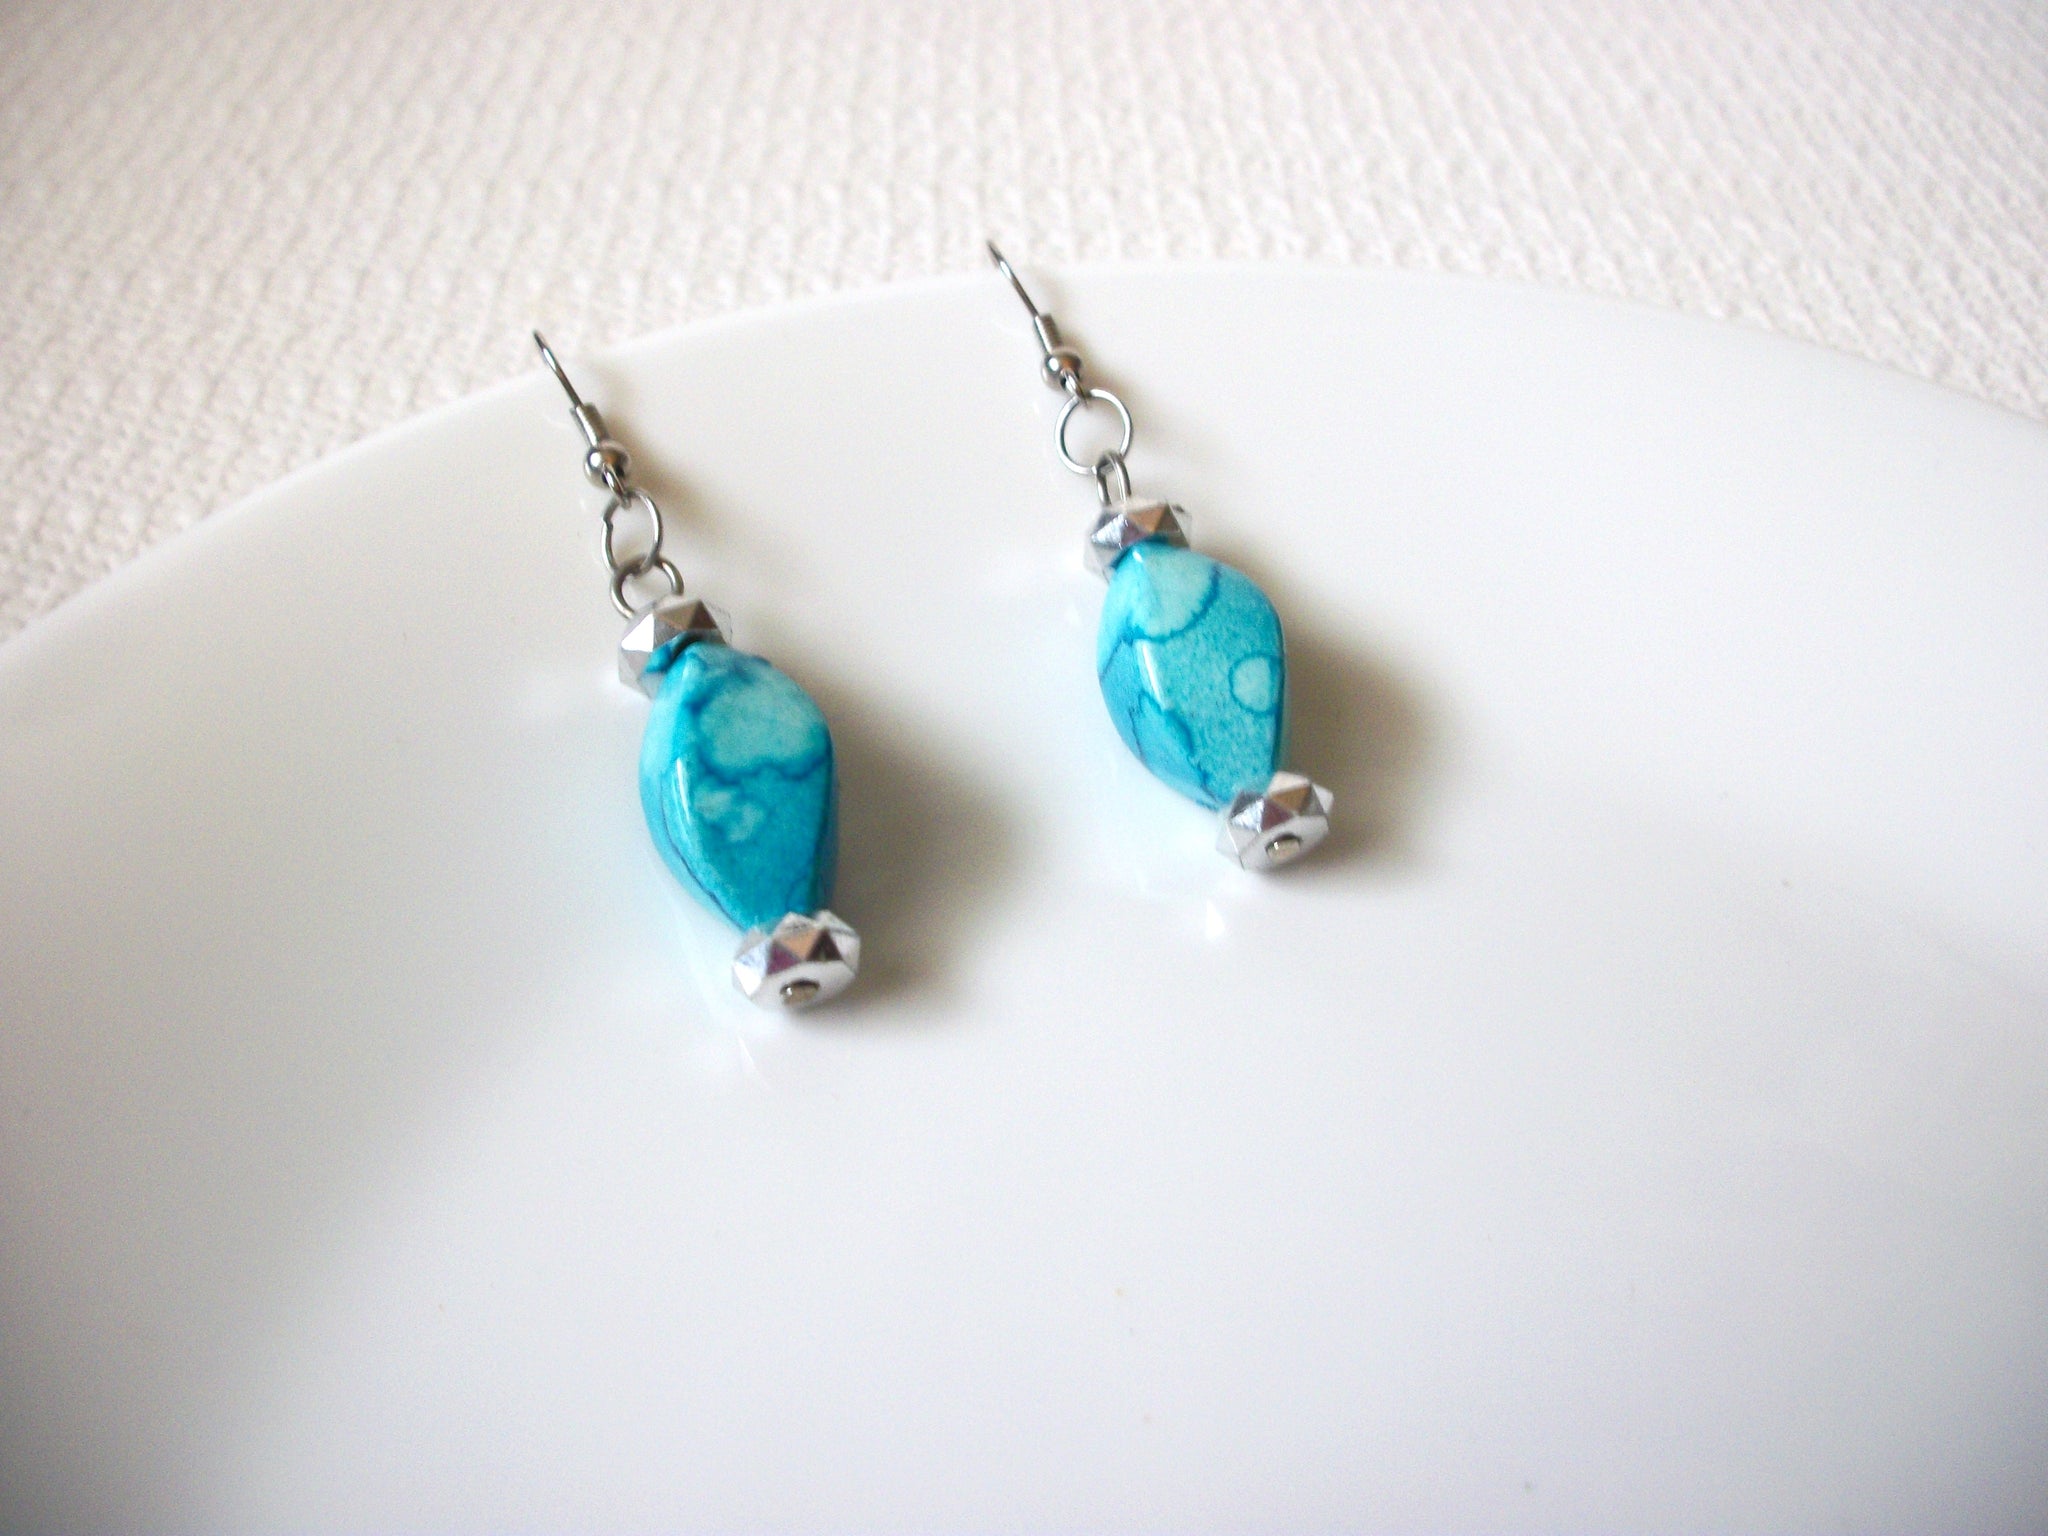 Retro Blue Dangle Earrings 91520